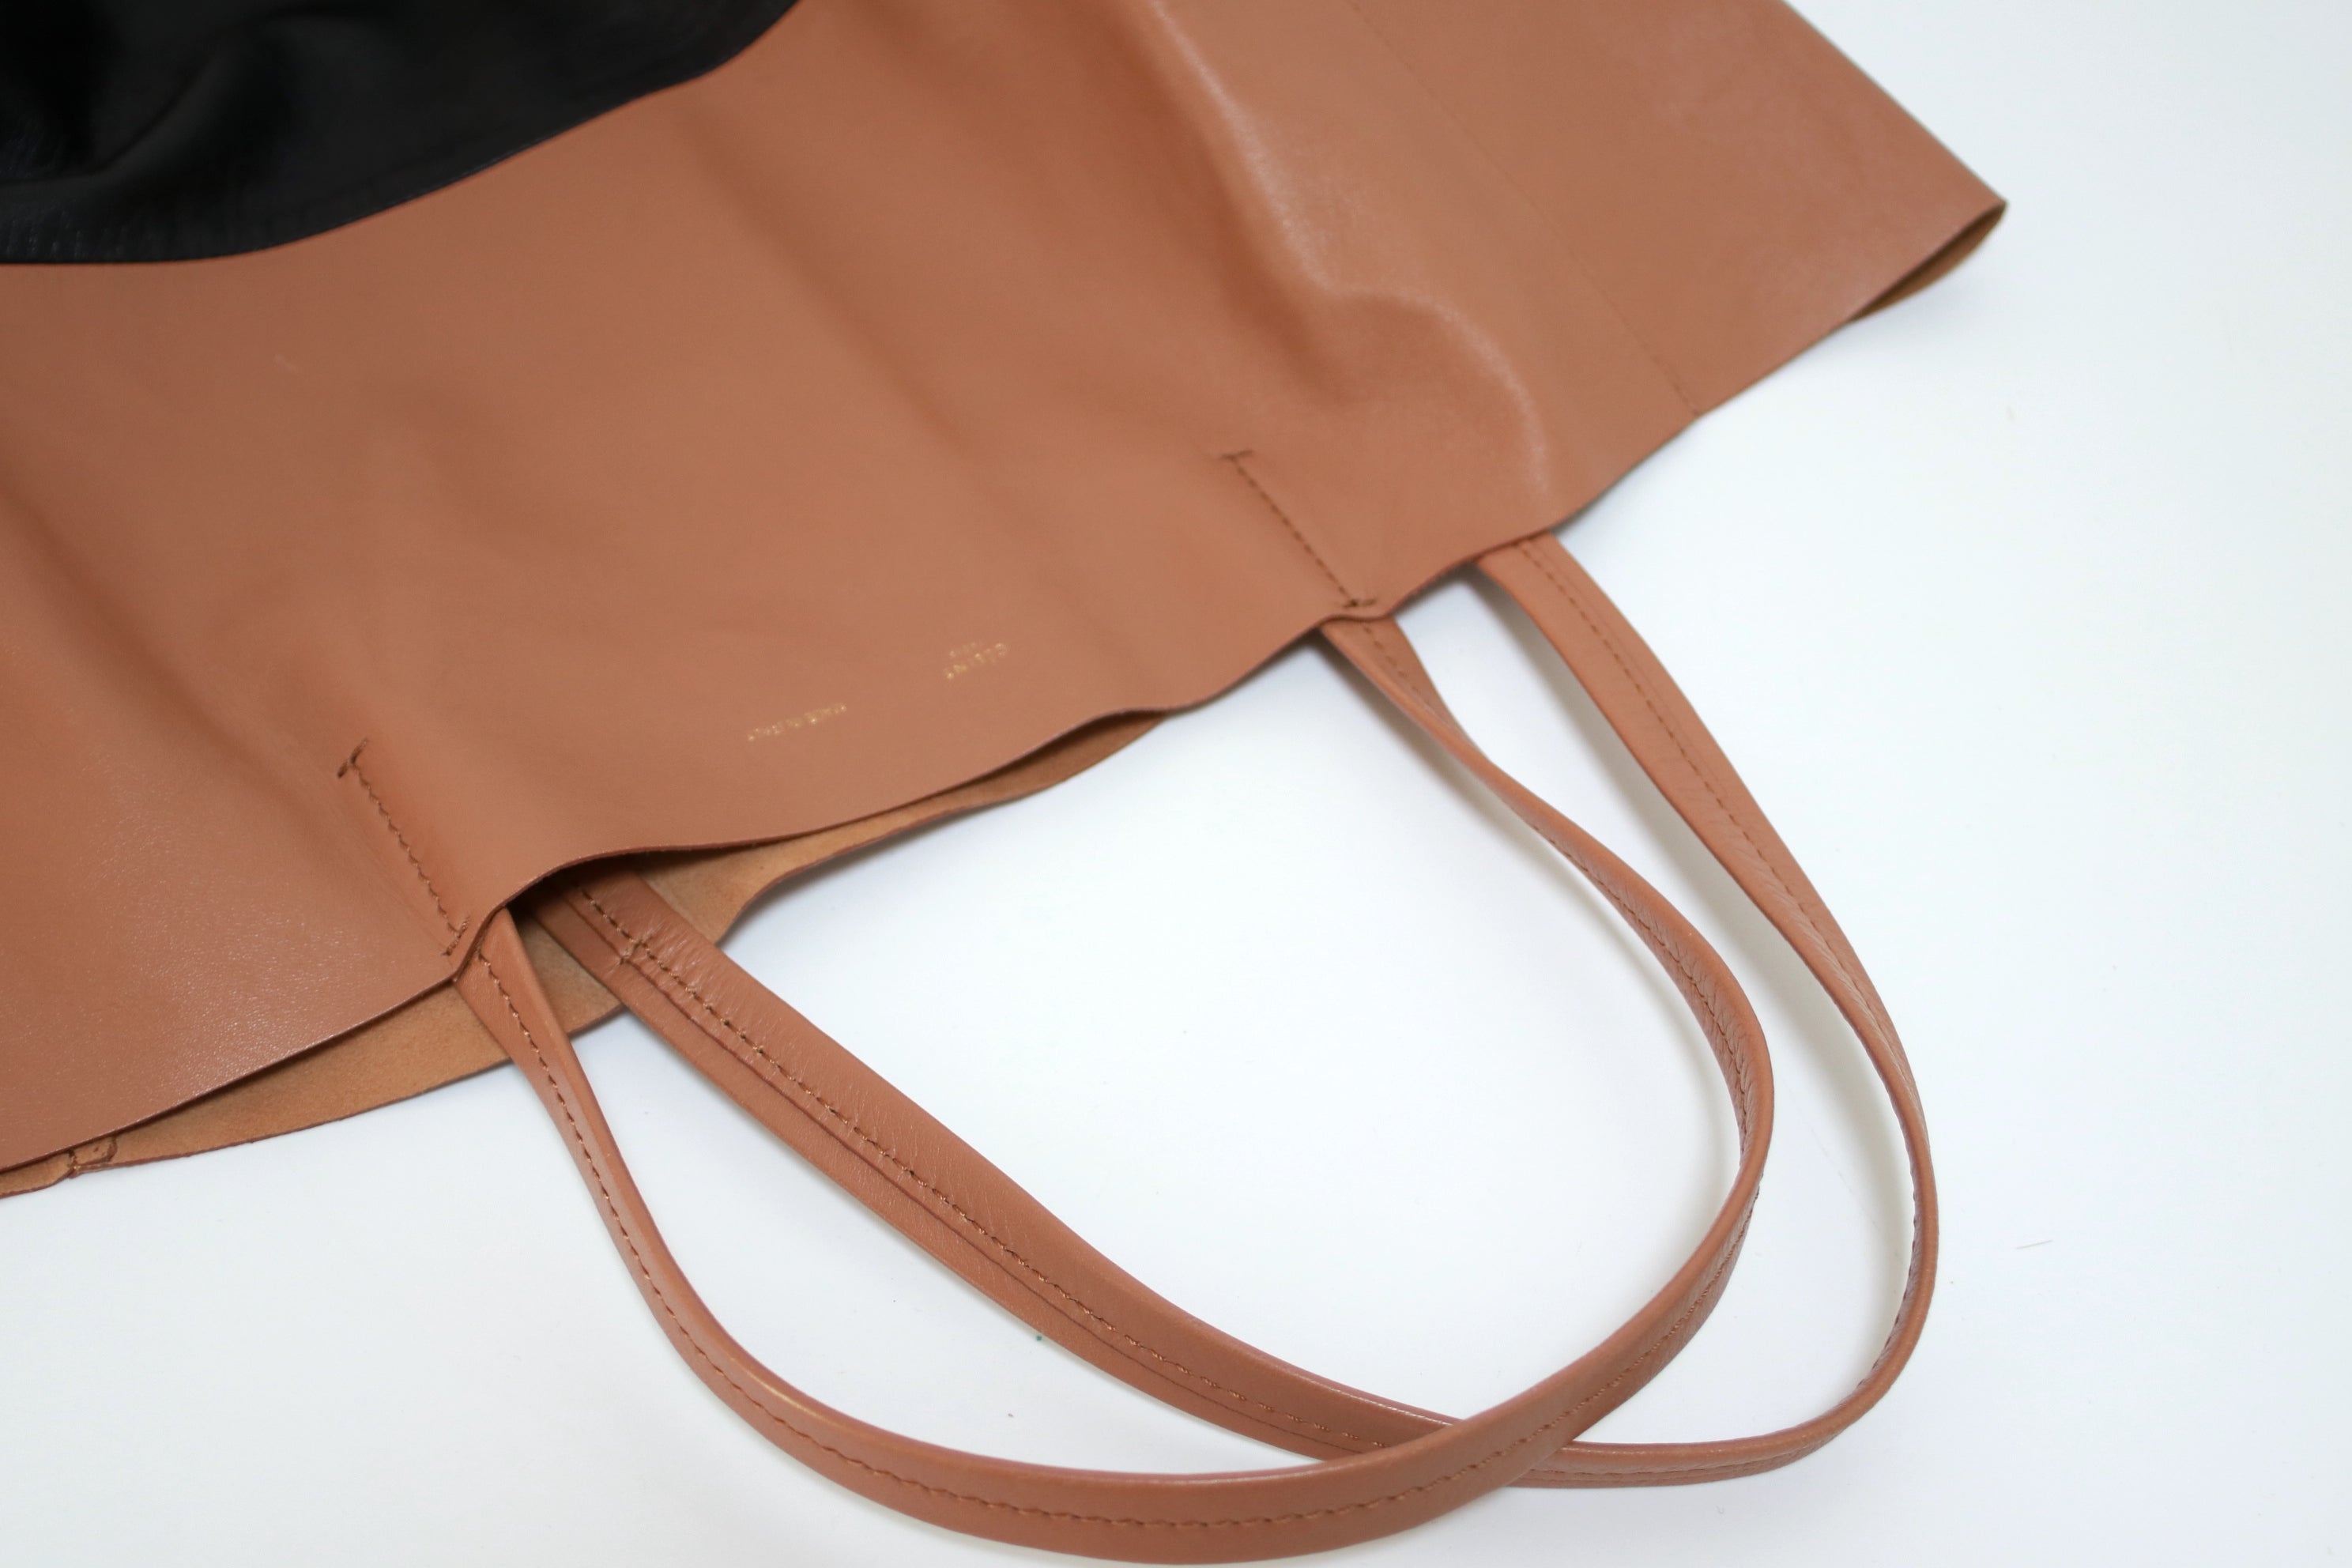 Celine Cabas Horizontal Tote Bag Used (7342)